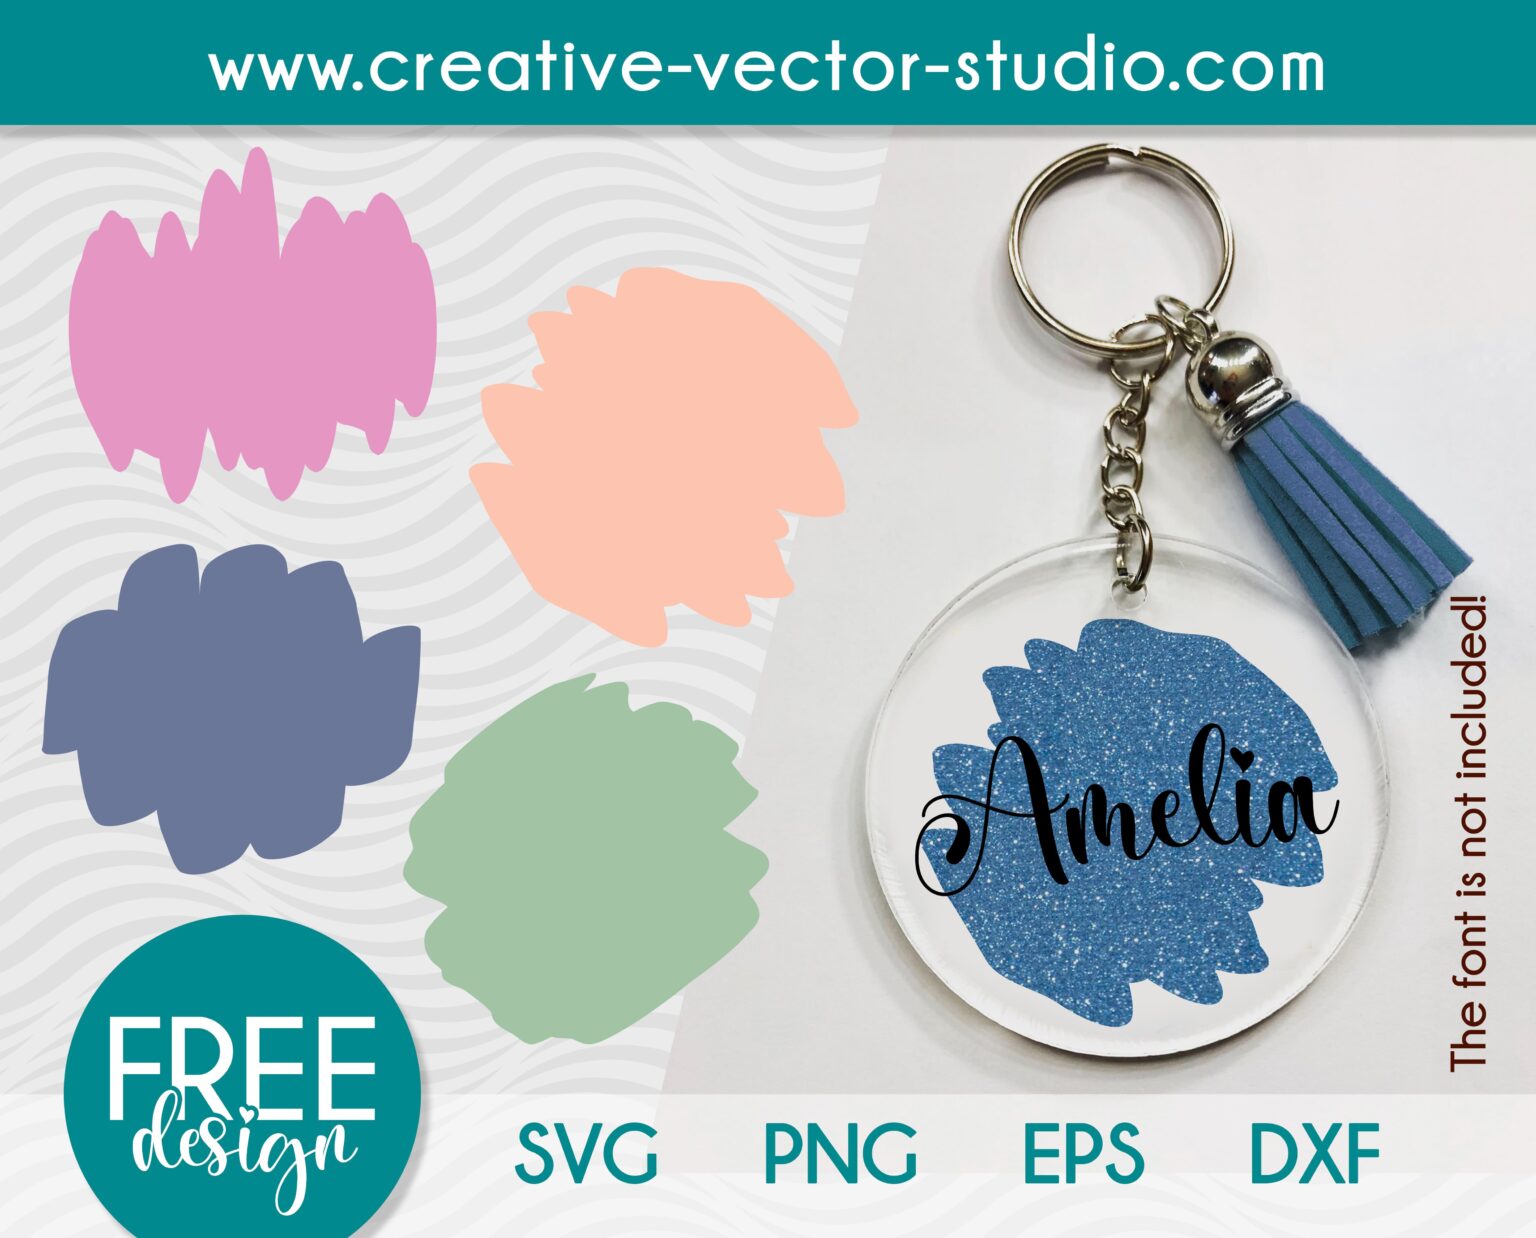 Free Paint Brush Stroke SVG Bundle | Creative Vector Studio